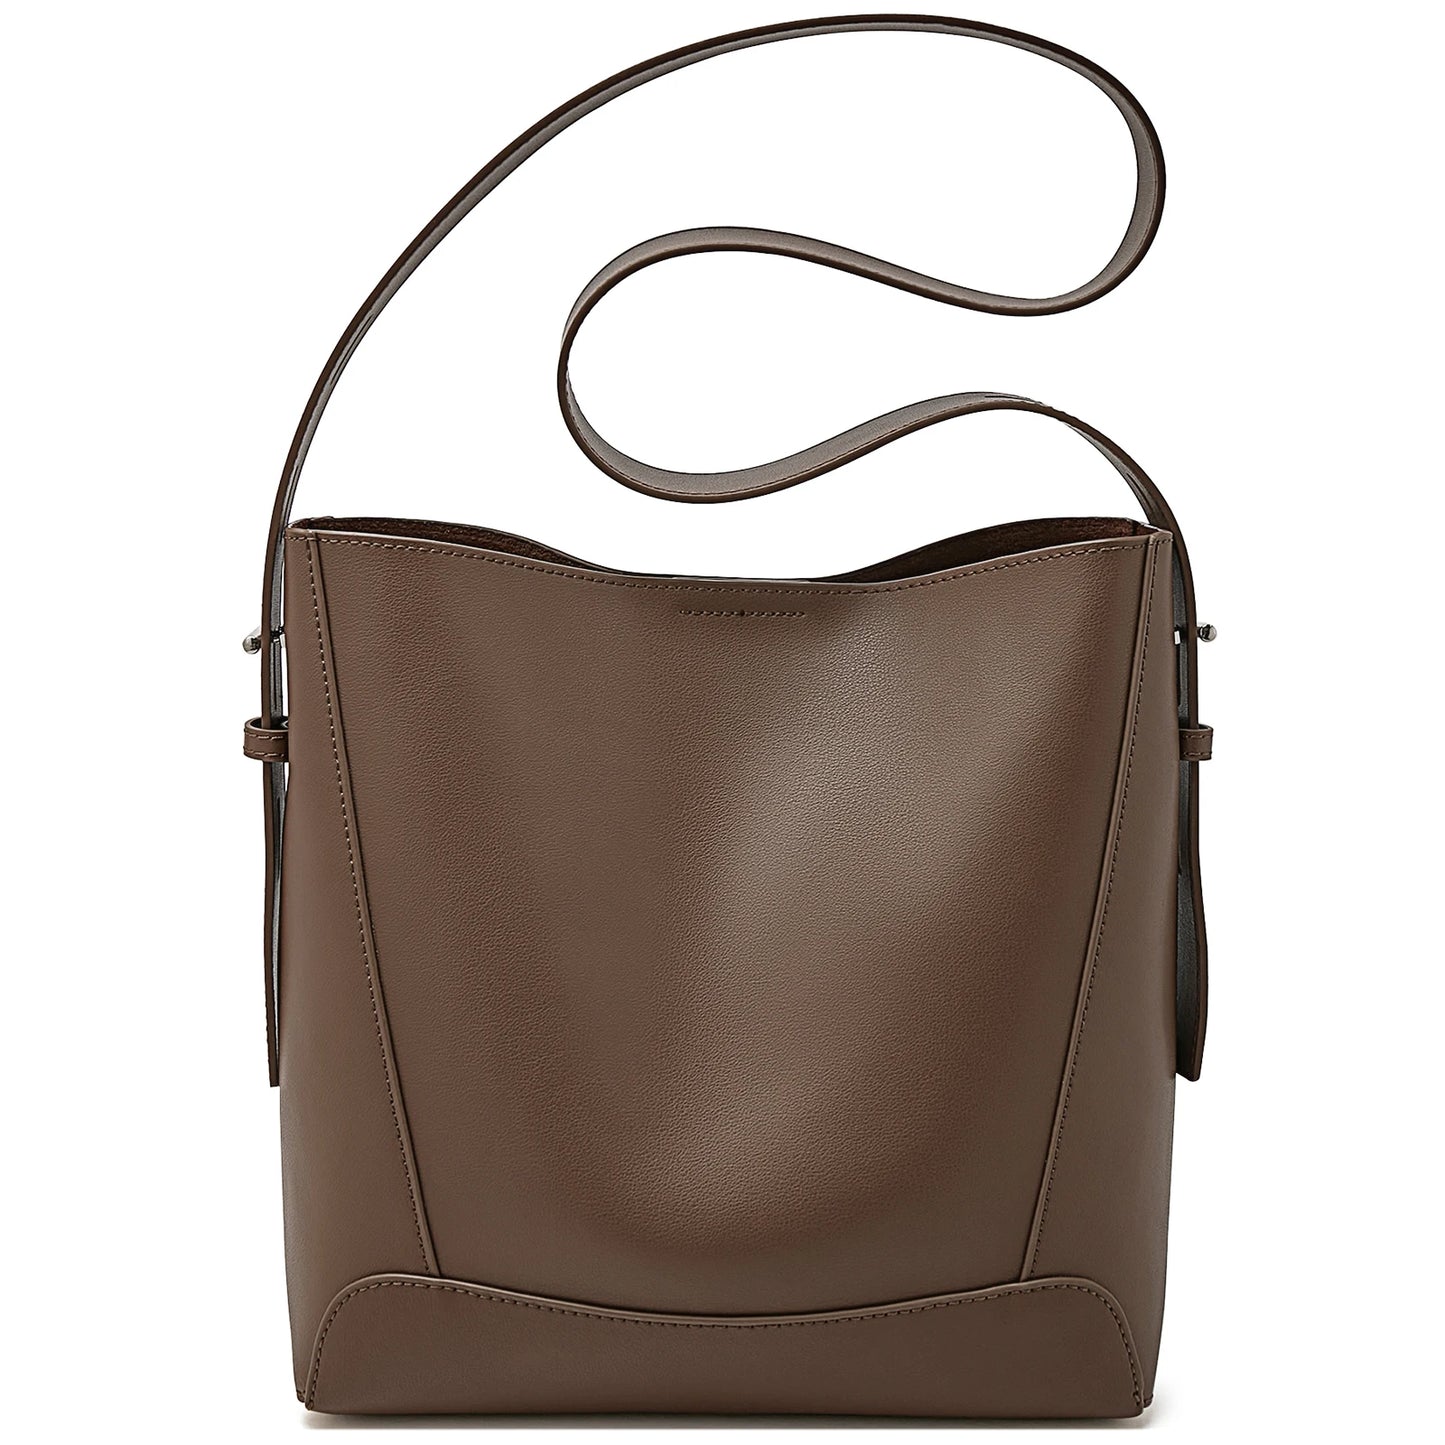 FOXER Lady Fashion Retro Shoulder Bag Large Capacity Brown